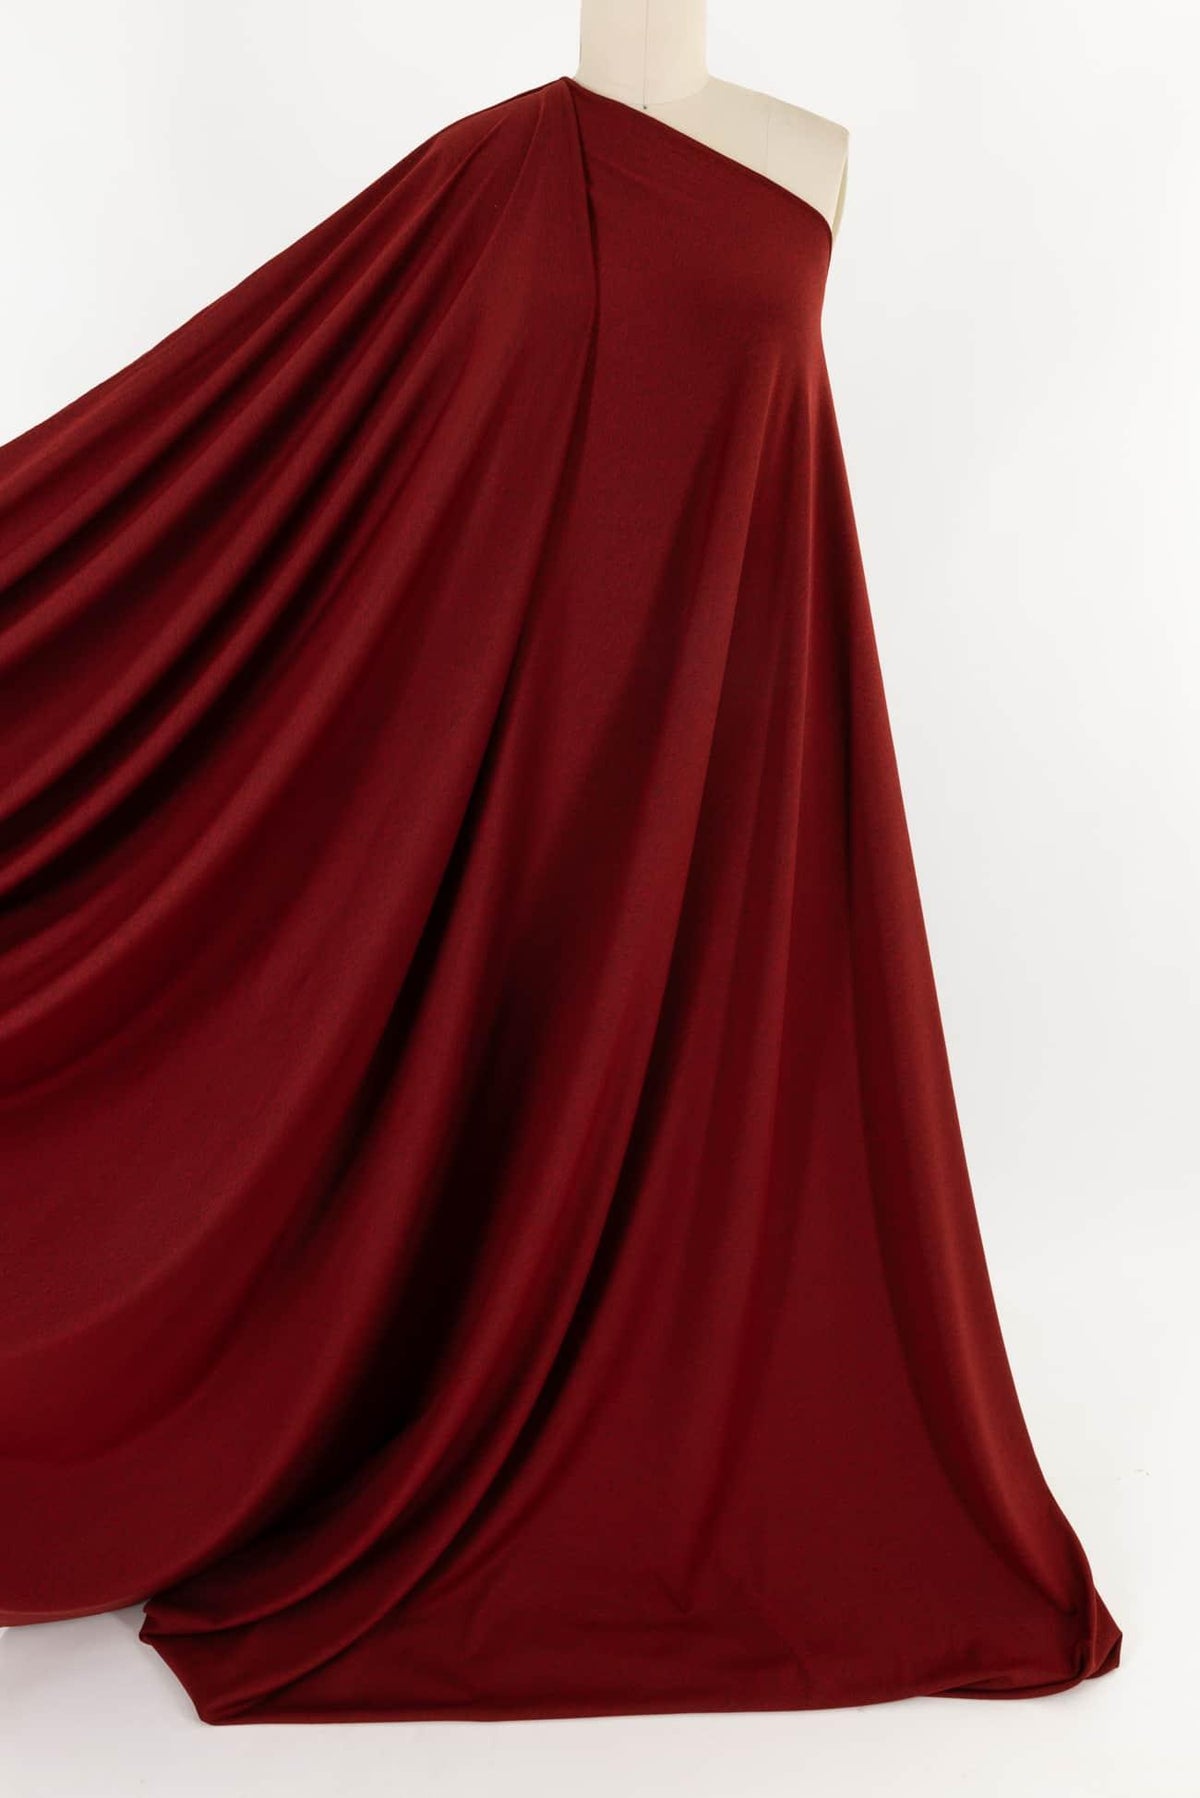 Red Chili USA Knit - Marcy Tilton Fabrics